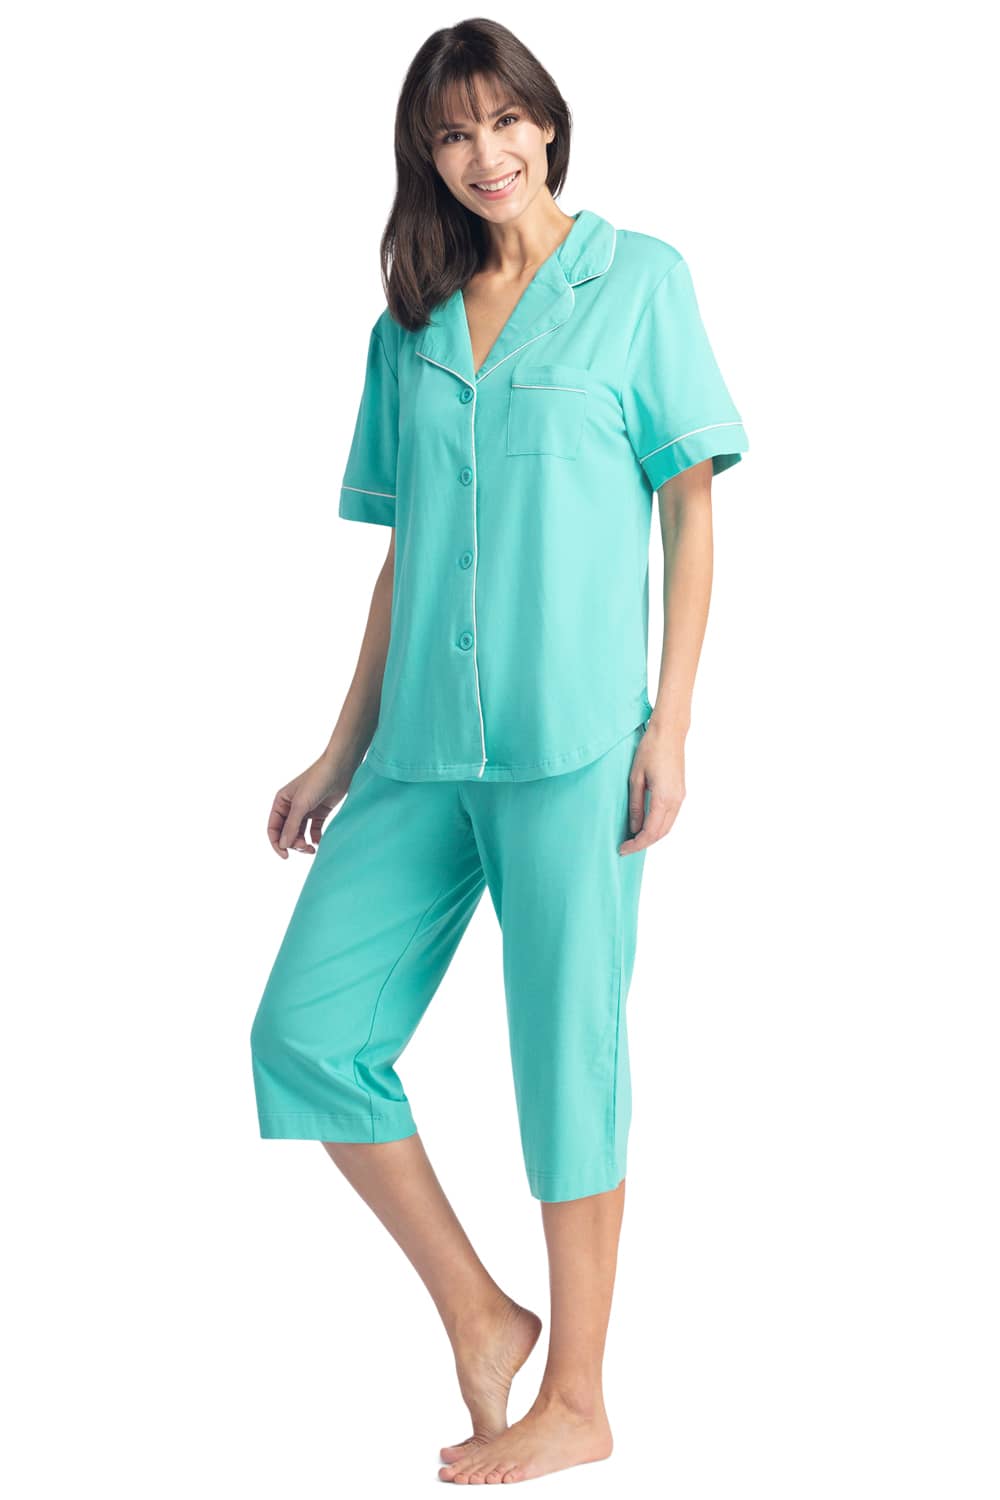 Turquoise Silk Blend Pyjama Set, Silk Nightwear, Unique Gift for